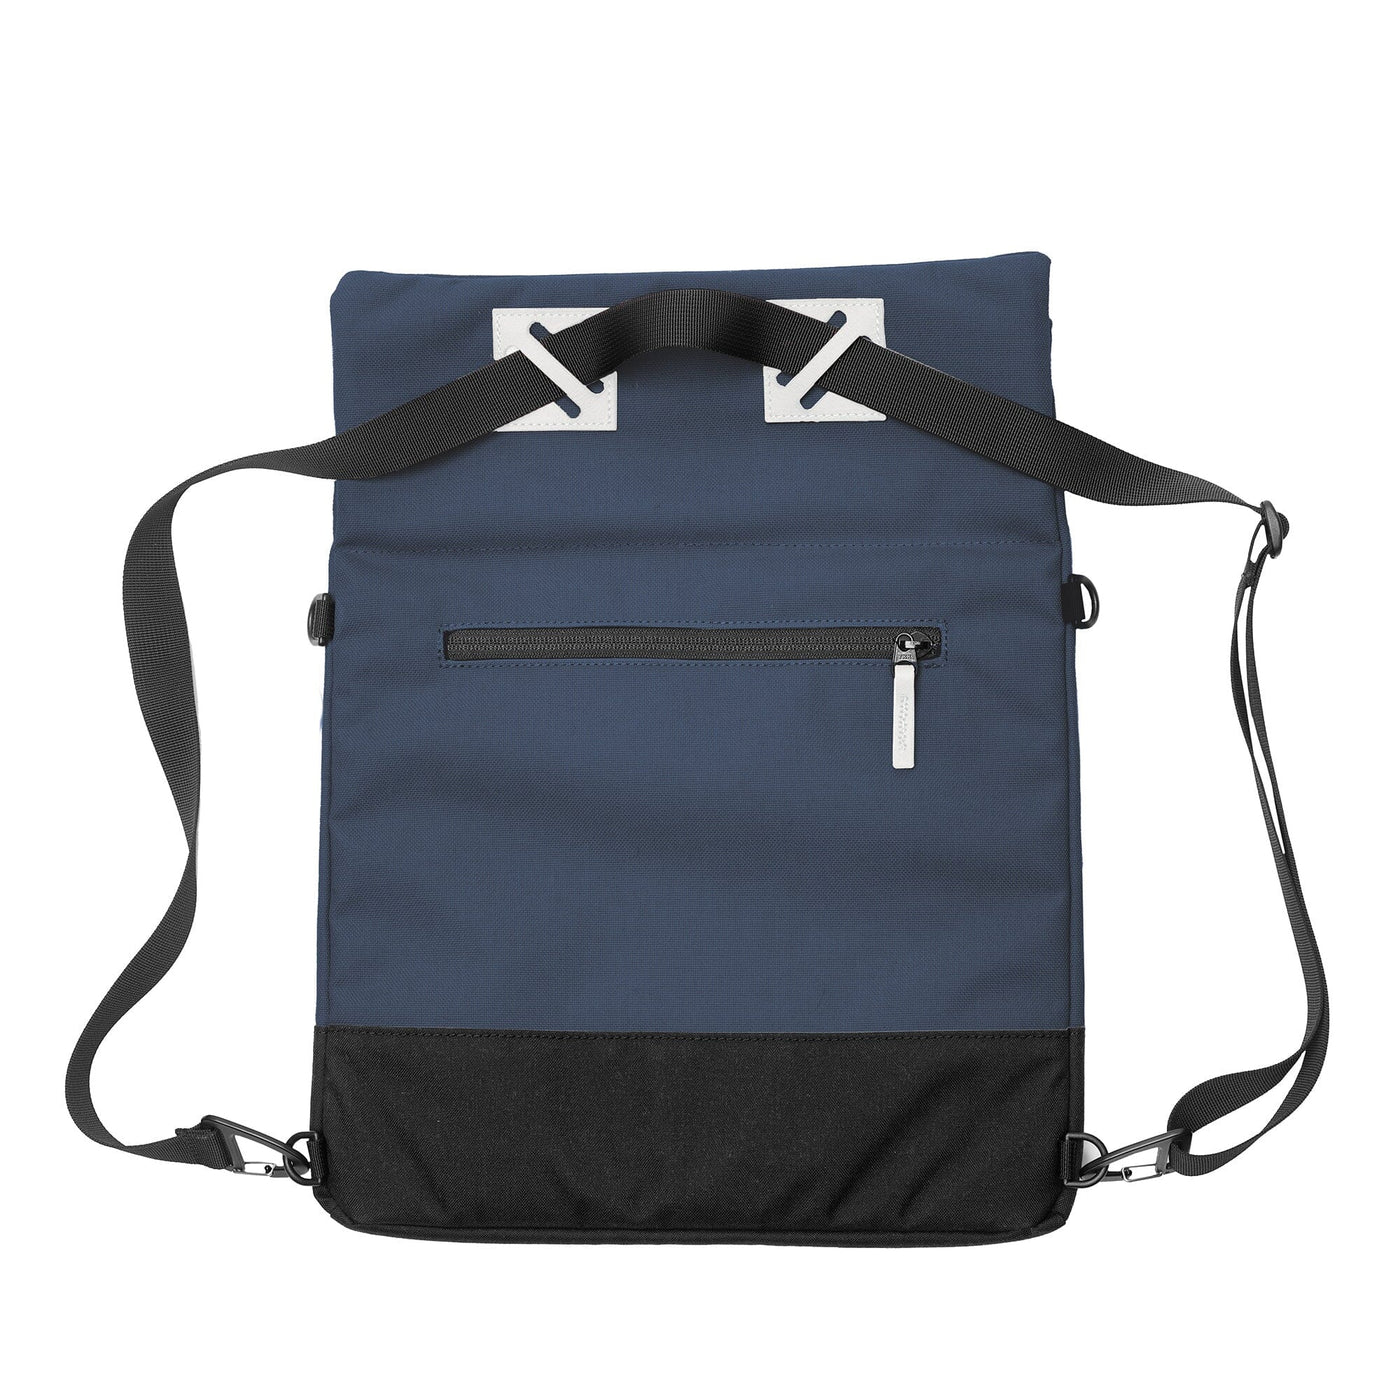 mero mero meije pouch convertible shoulder bag navy blue color back